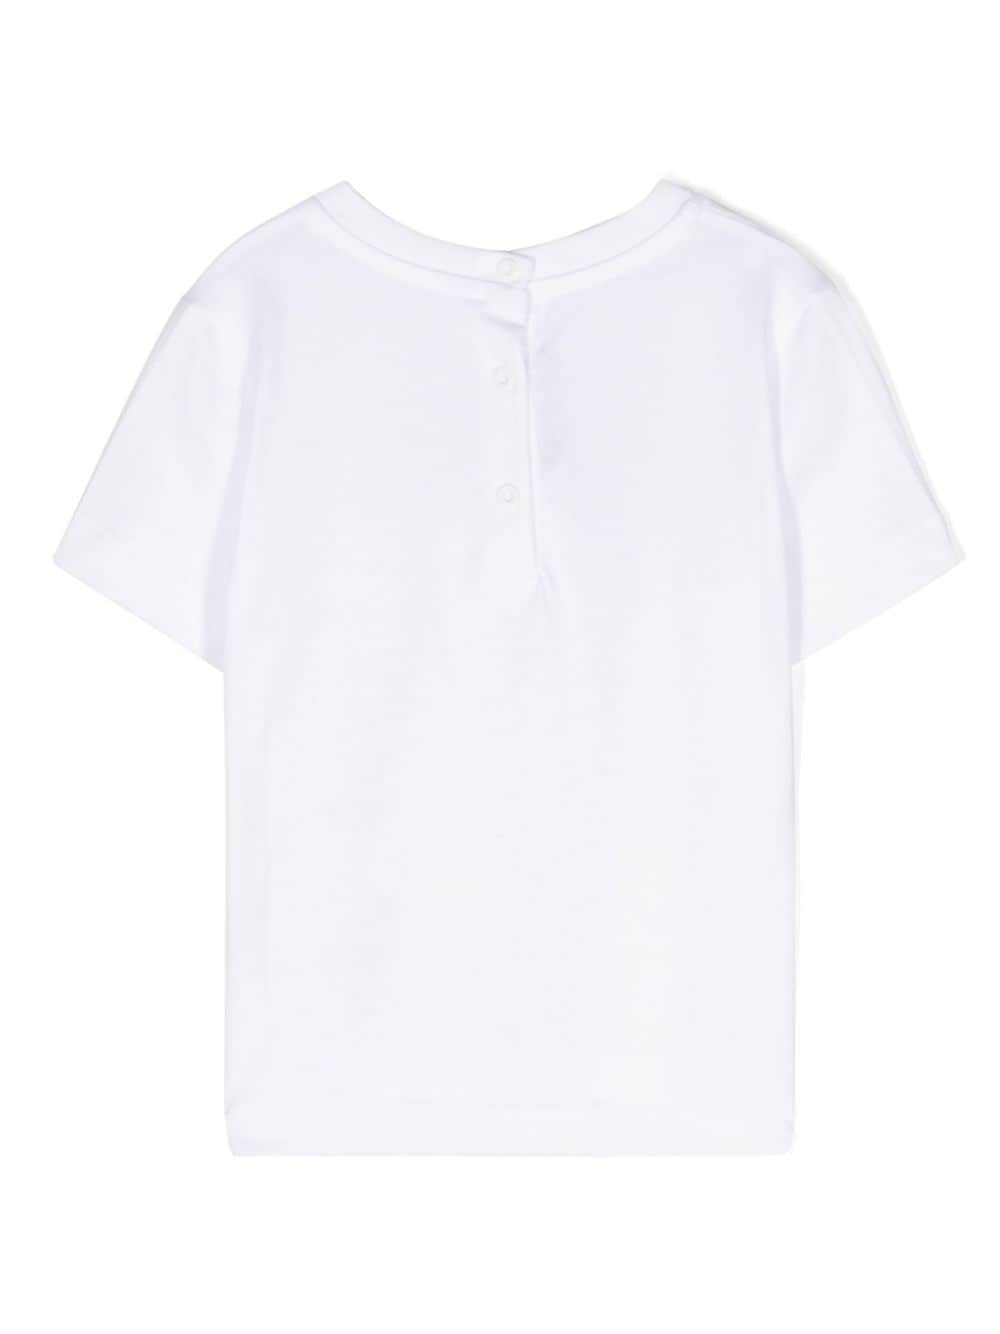 T-shirt bianca per neonata con logo